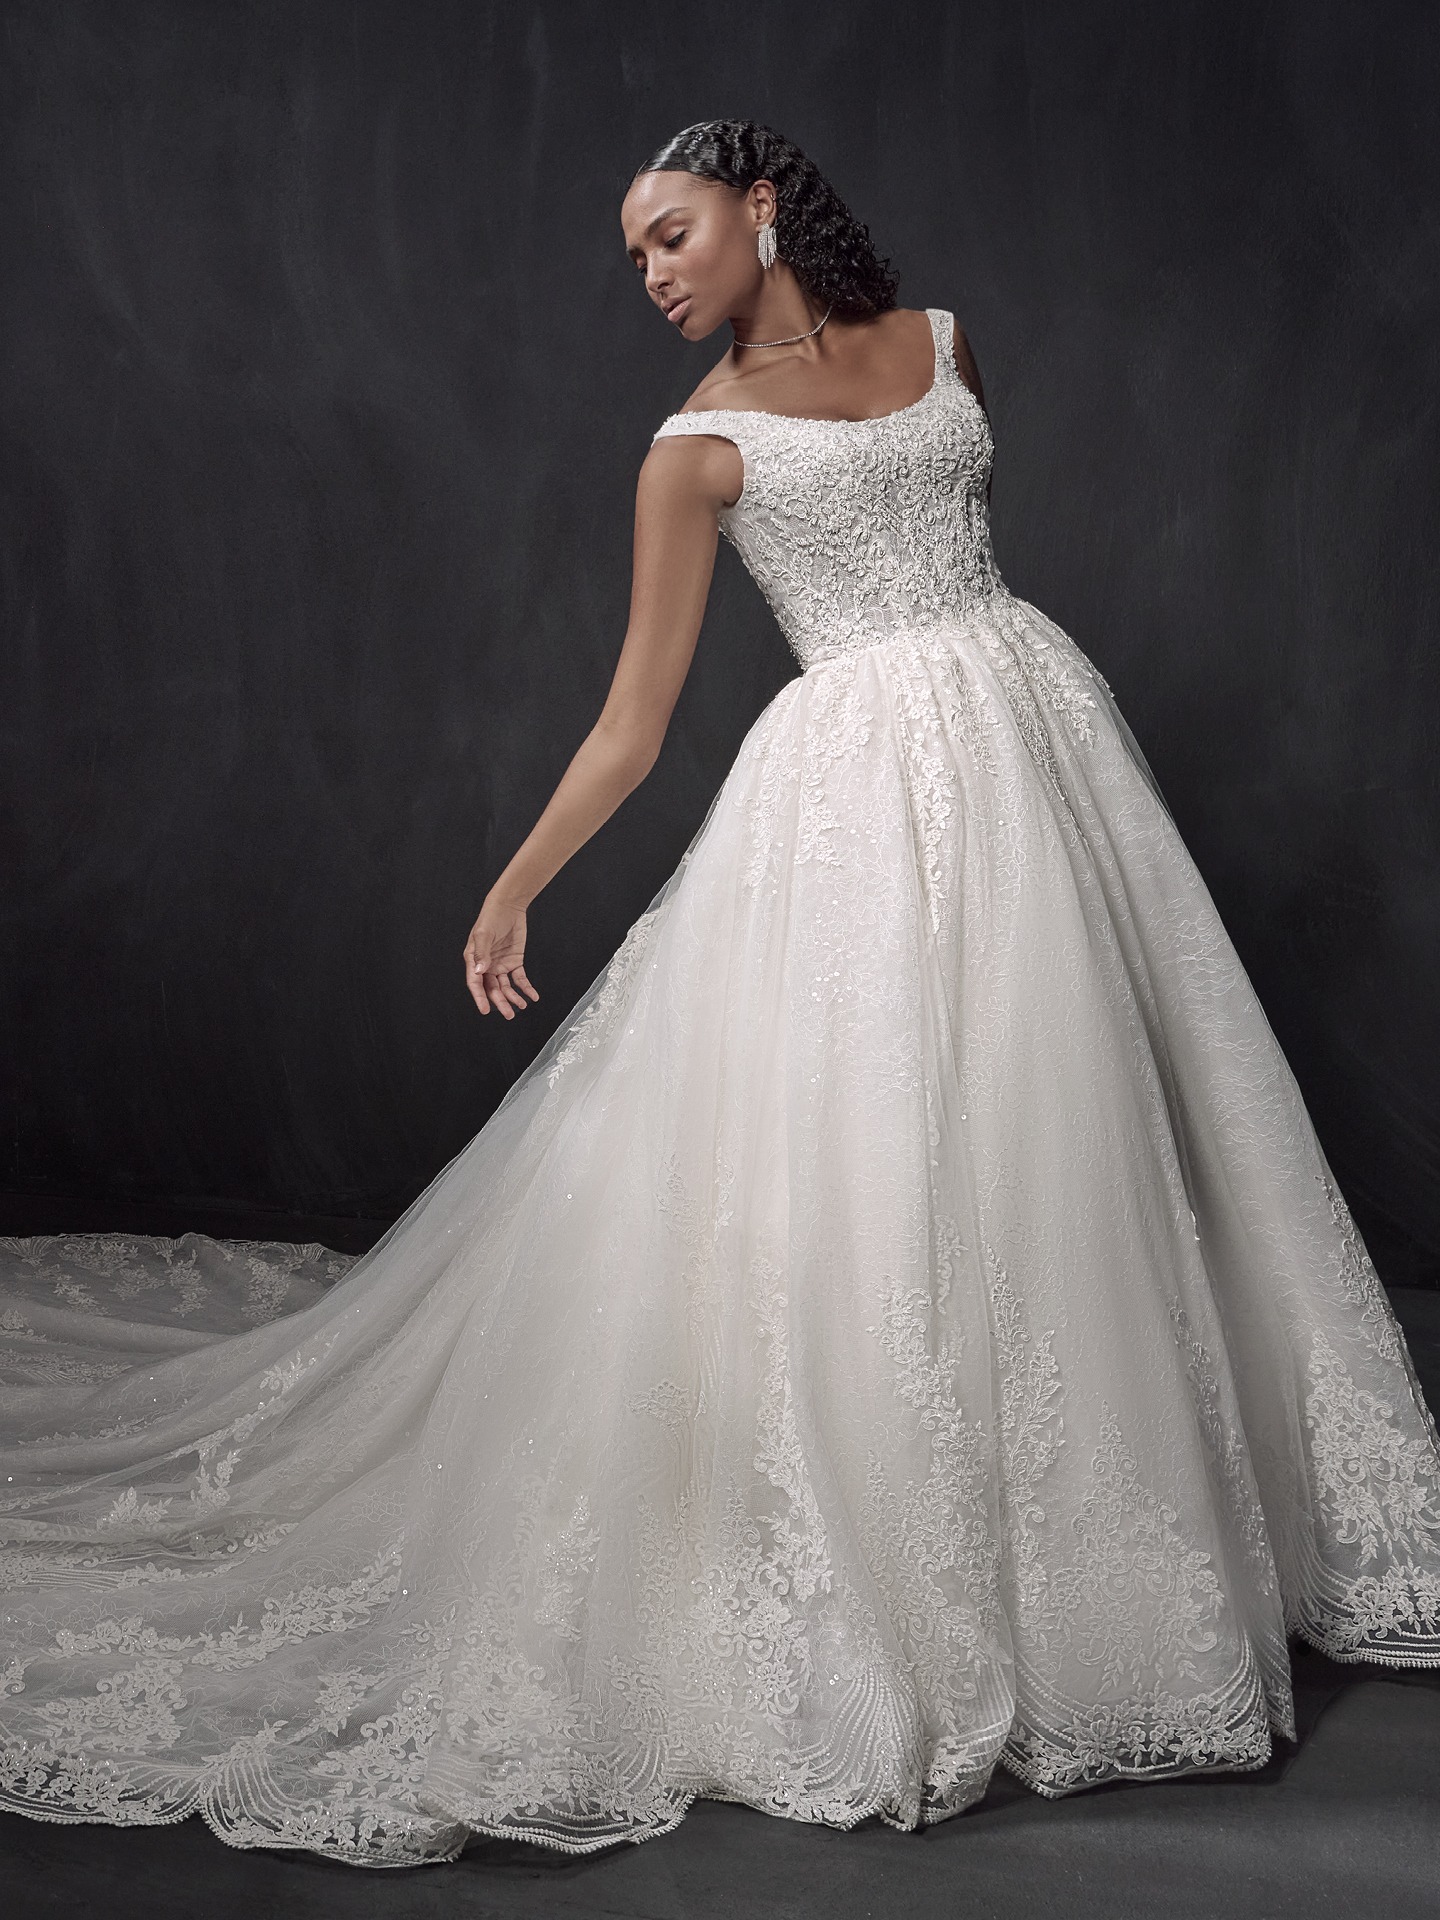 Lace plus size wedding dress | IGIGI.com